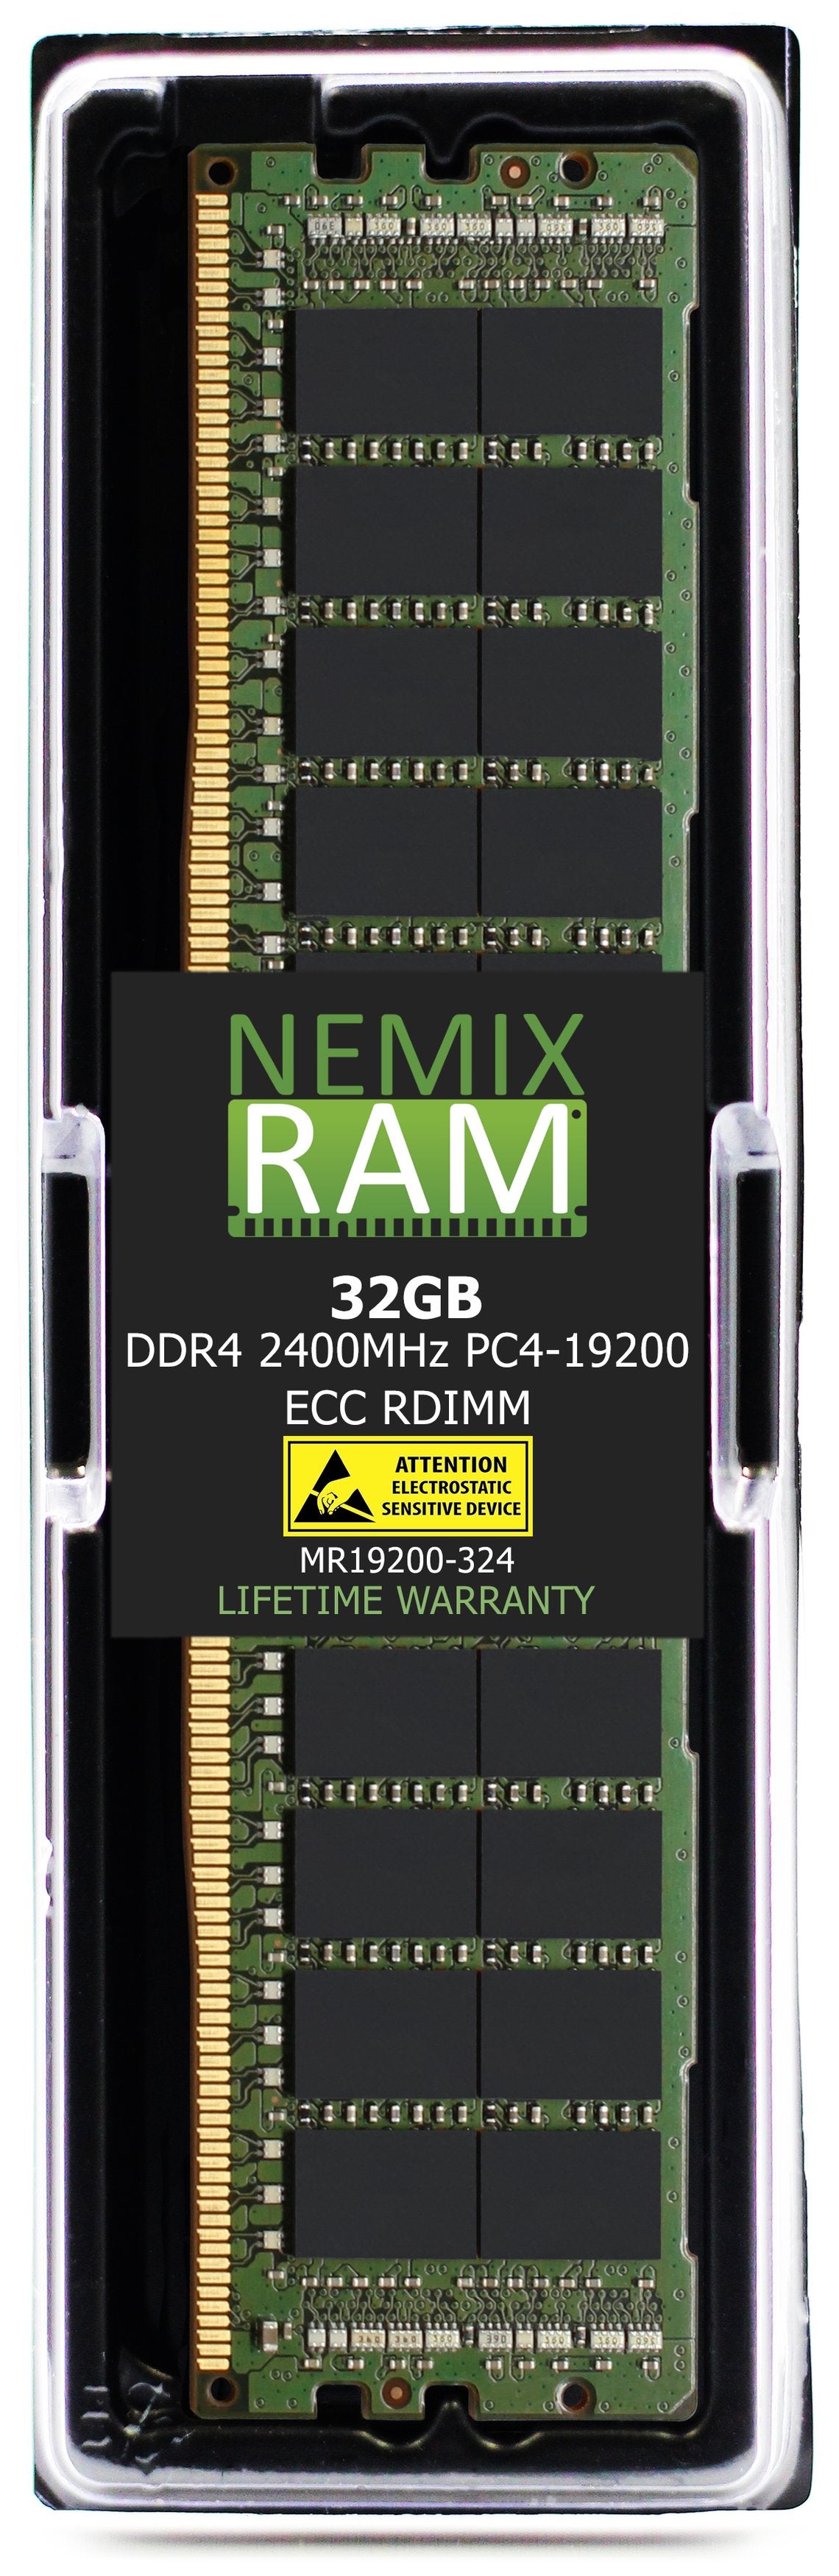 Hynix HMAA4GR8MMR4N-UH 32GB DDR4 2400MHZ PC4-19200 RDIMM Compatible Memory Module